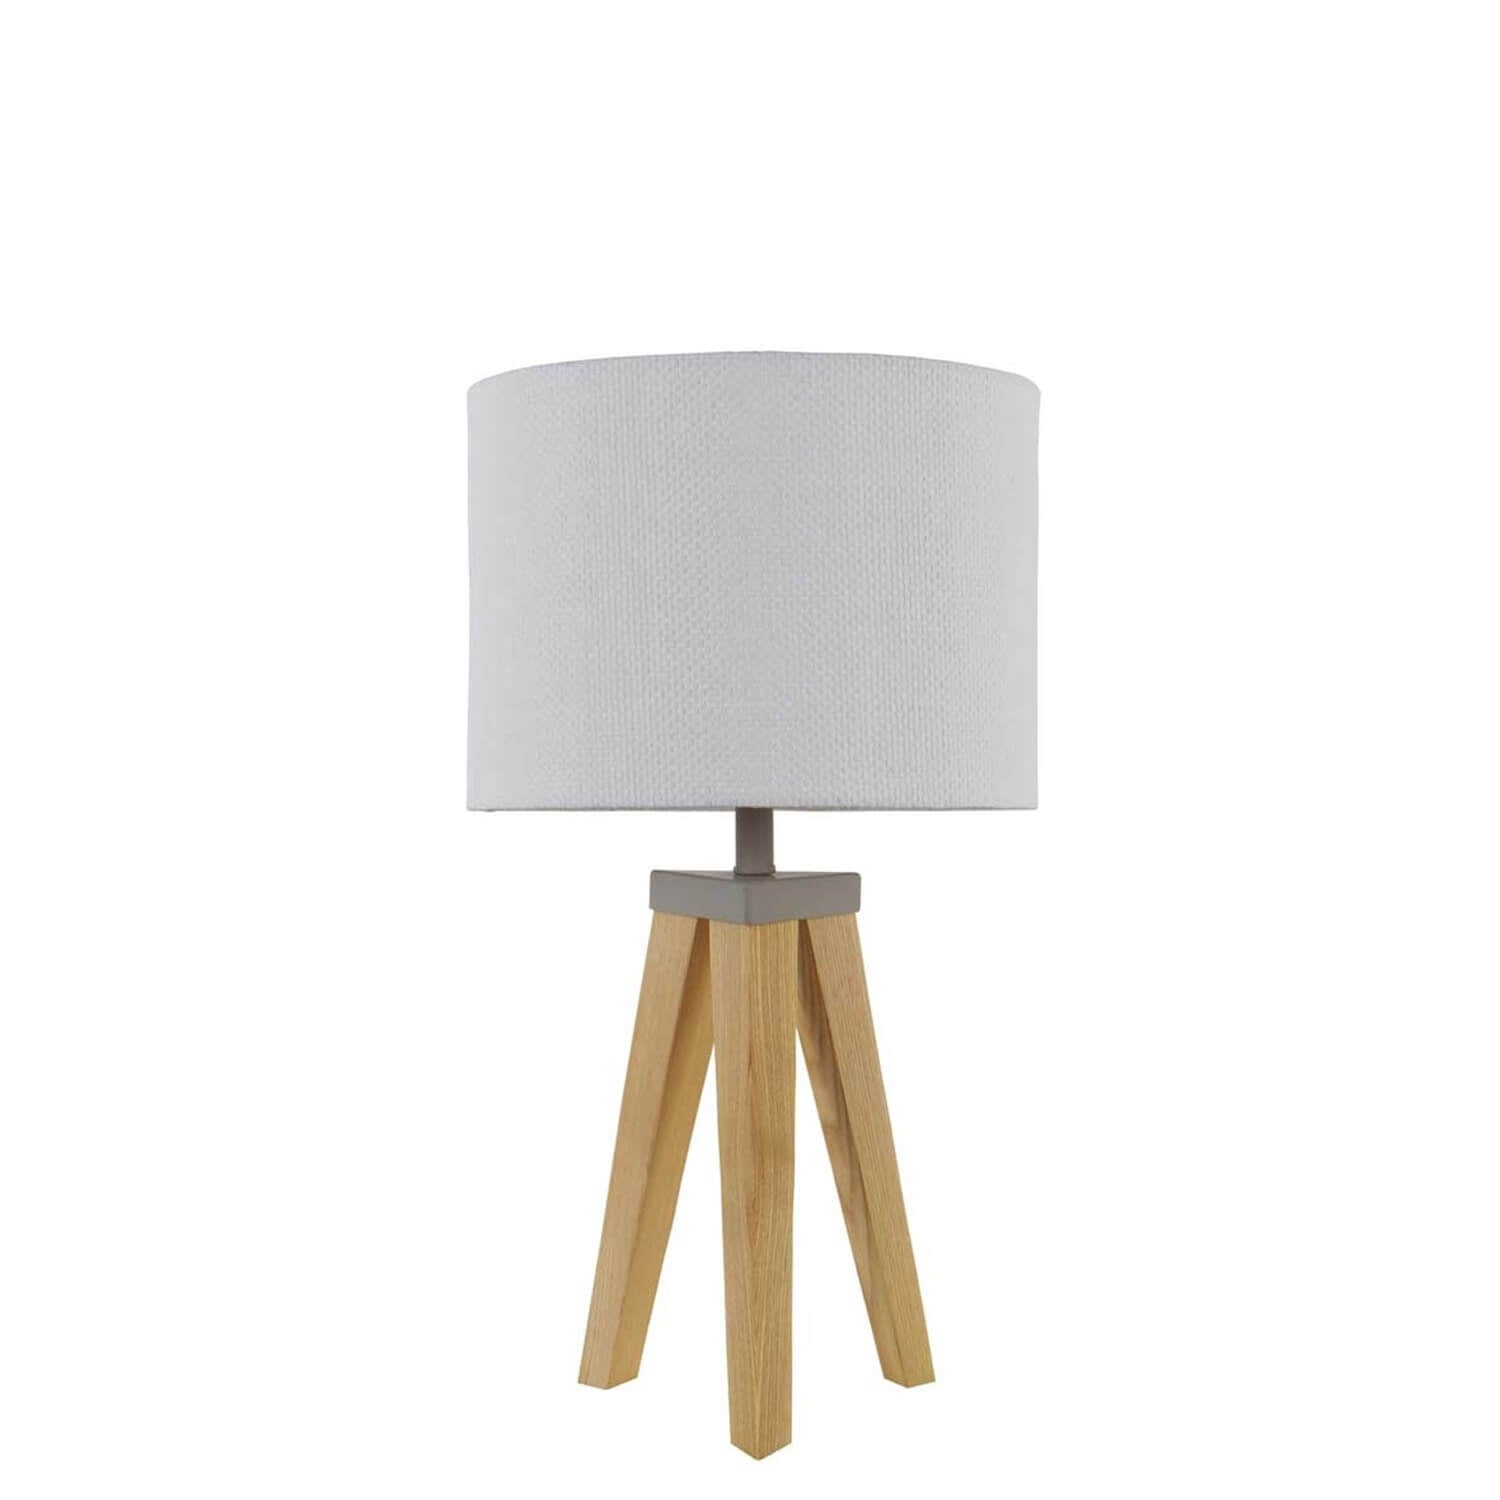 Mantua table lamp